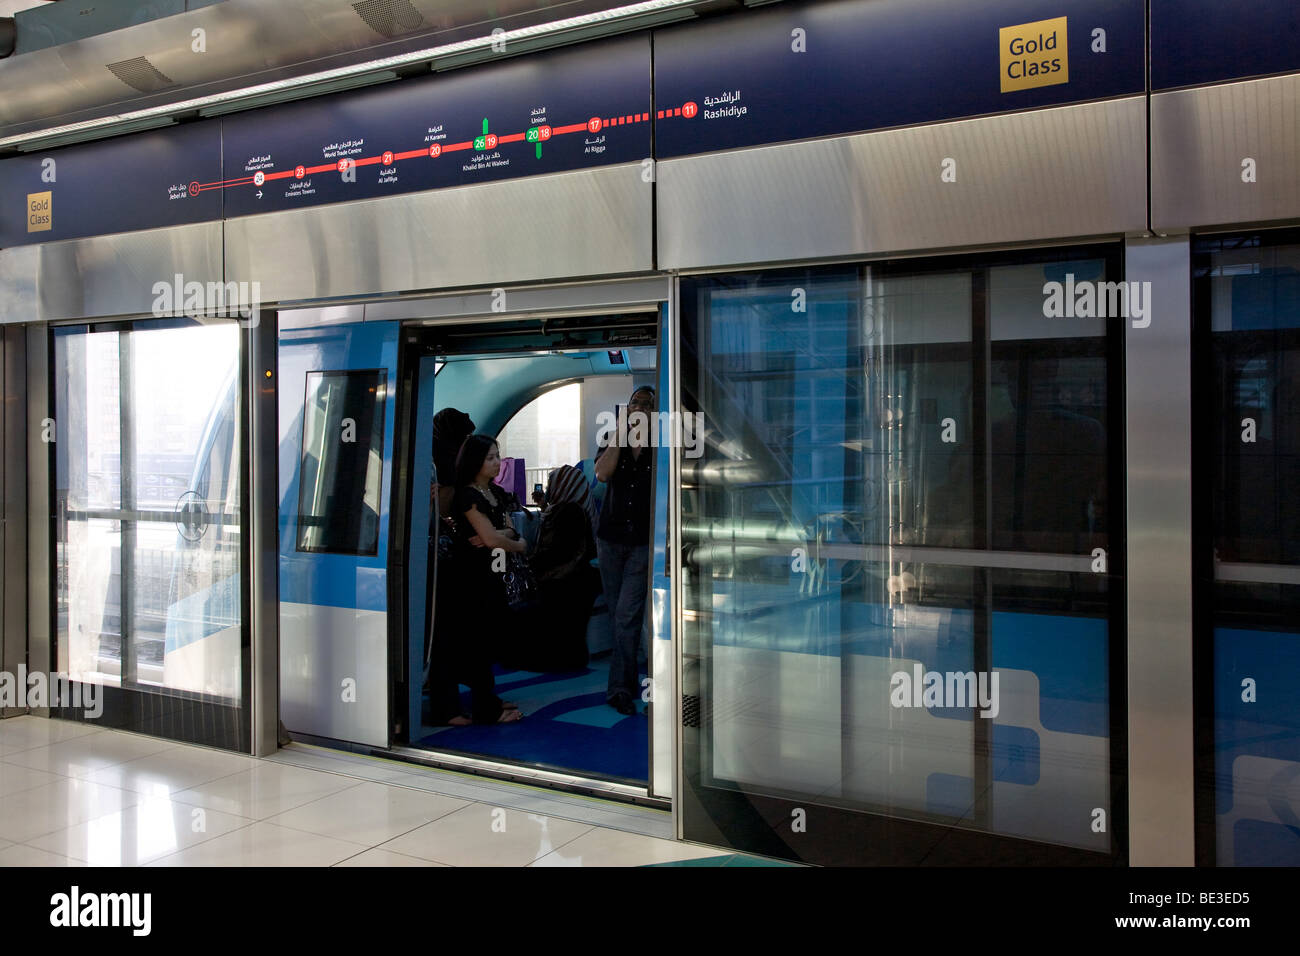 New Dubai Metro railway line track train trains Stock Photo